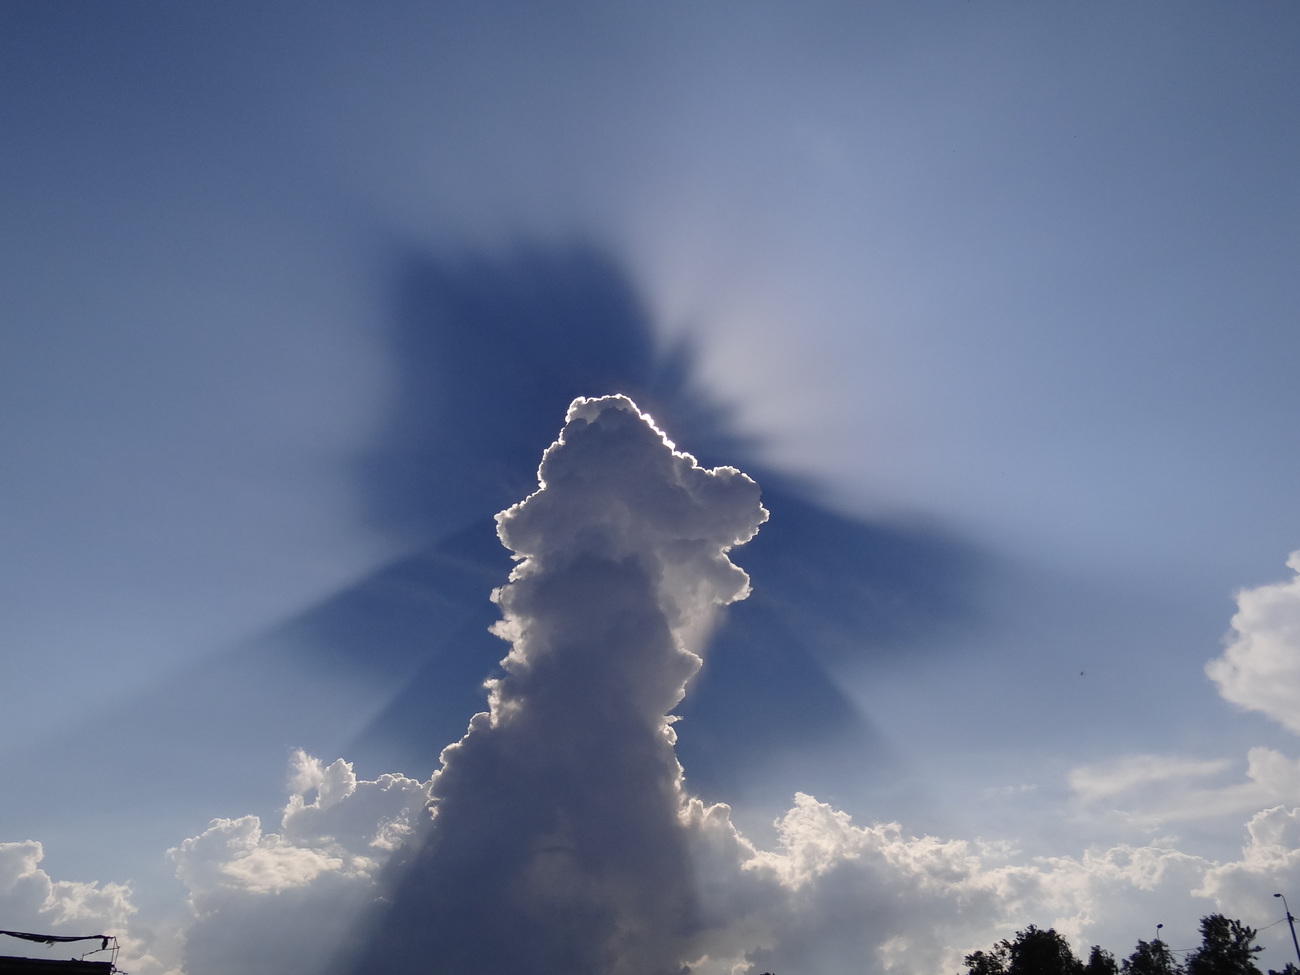 Fotografija oblaka na nebu